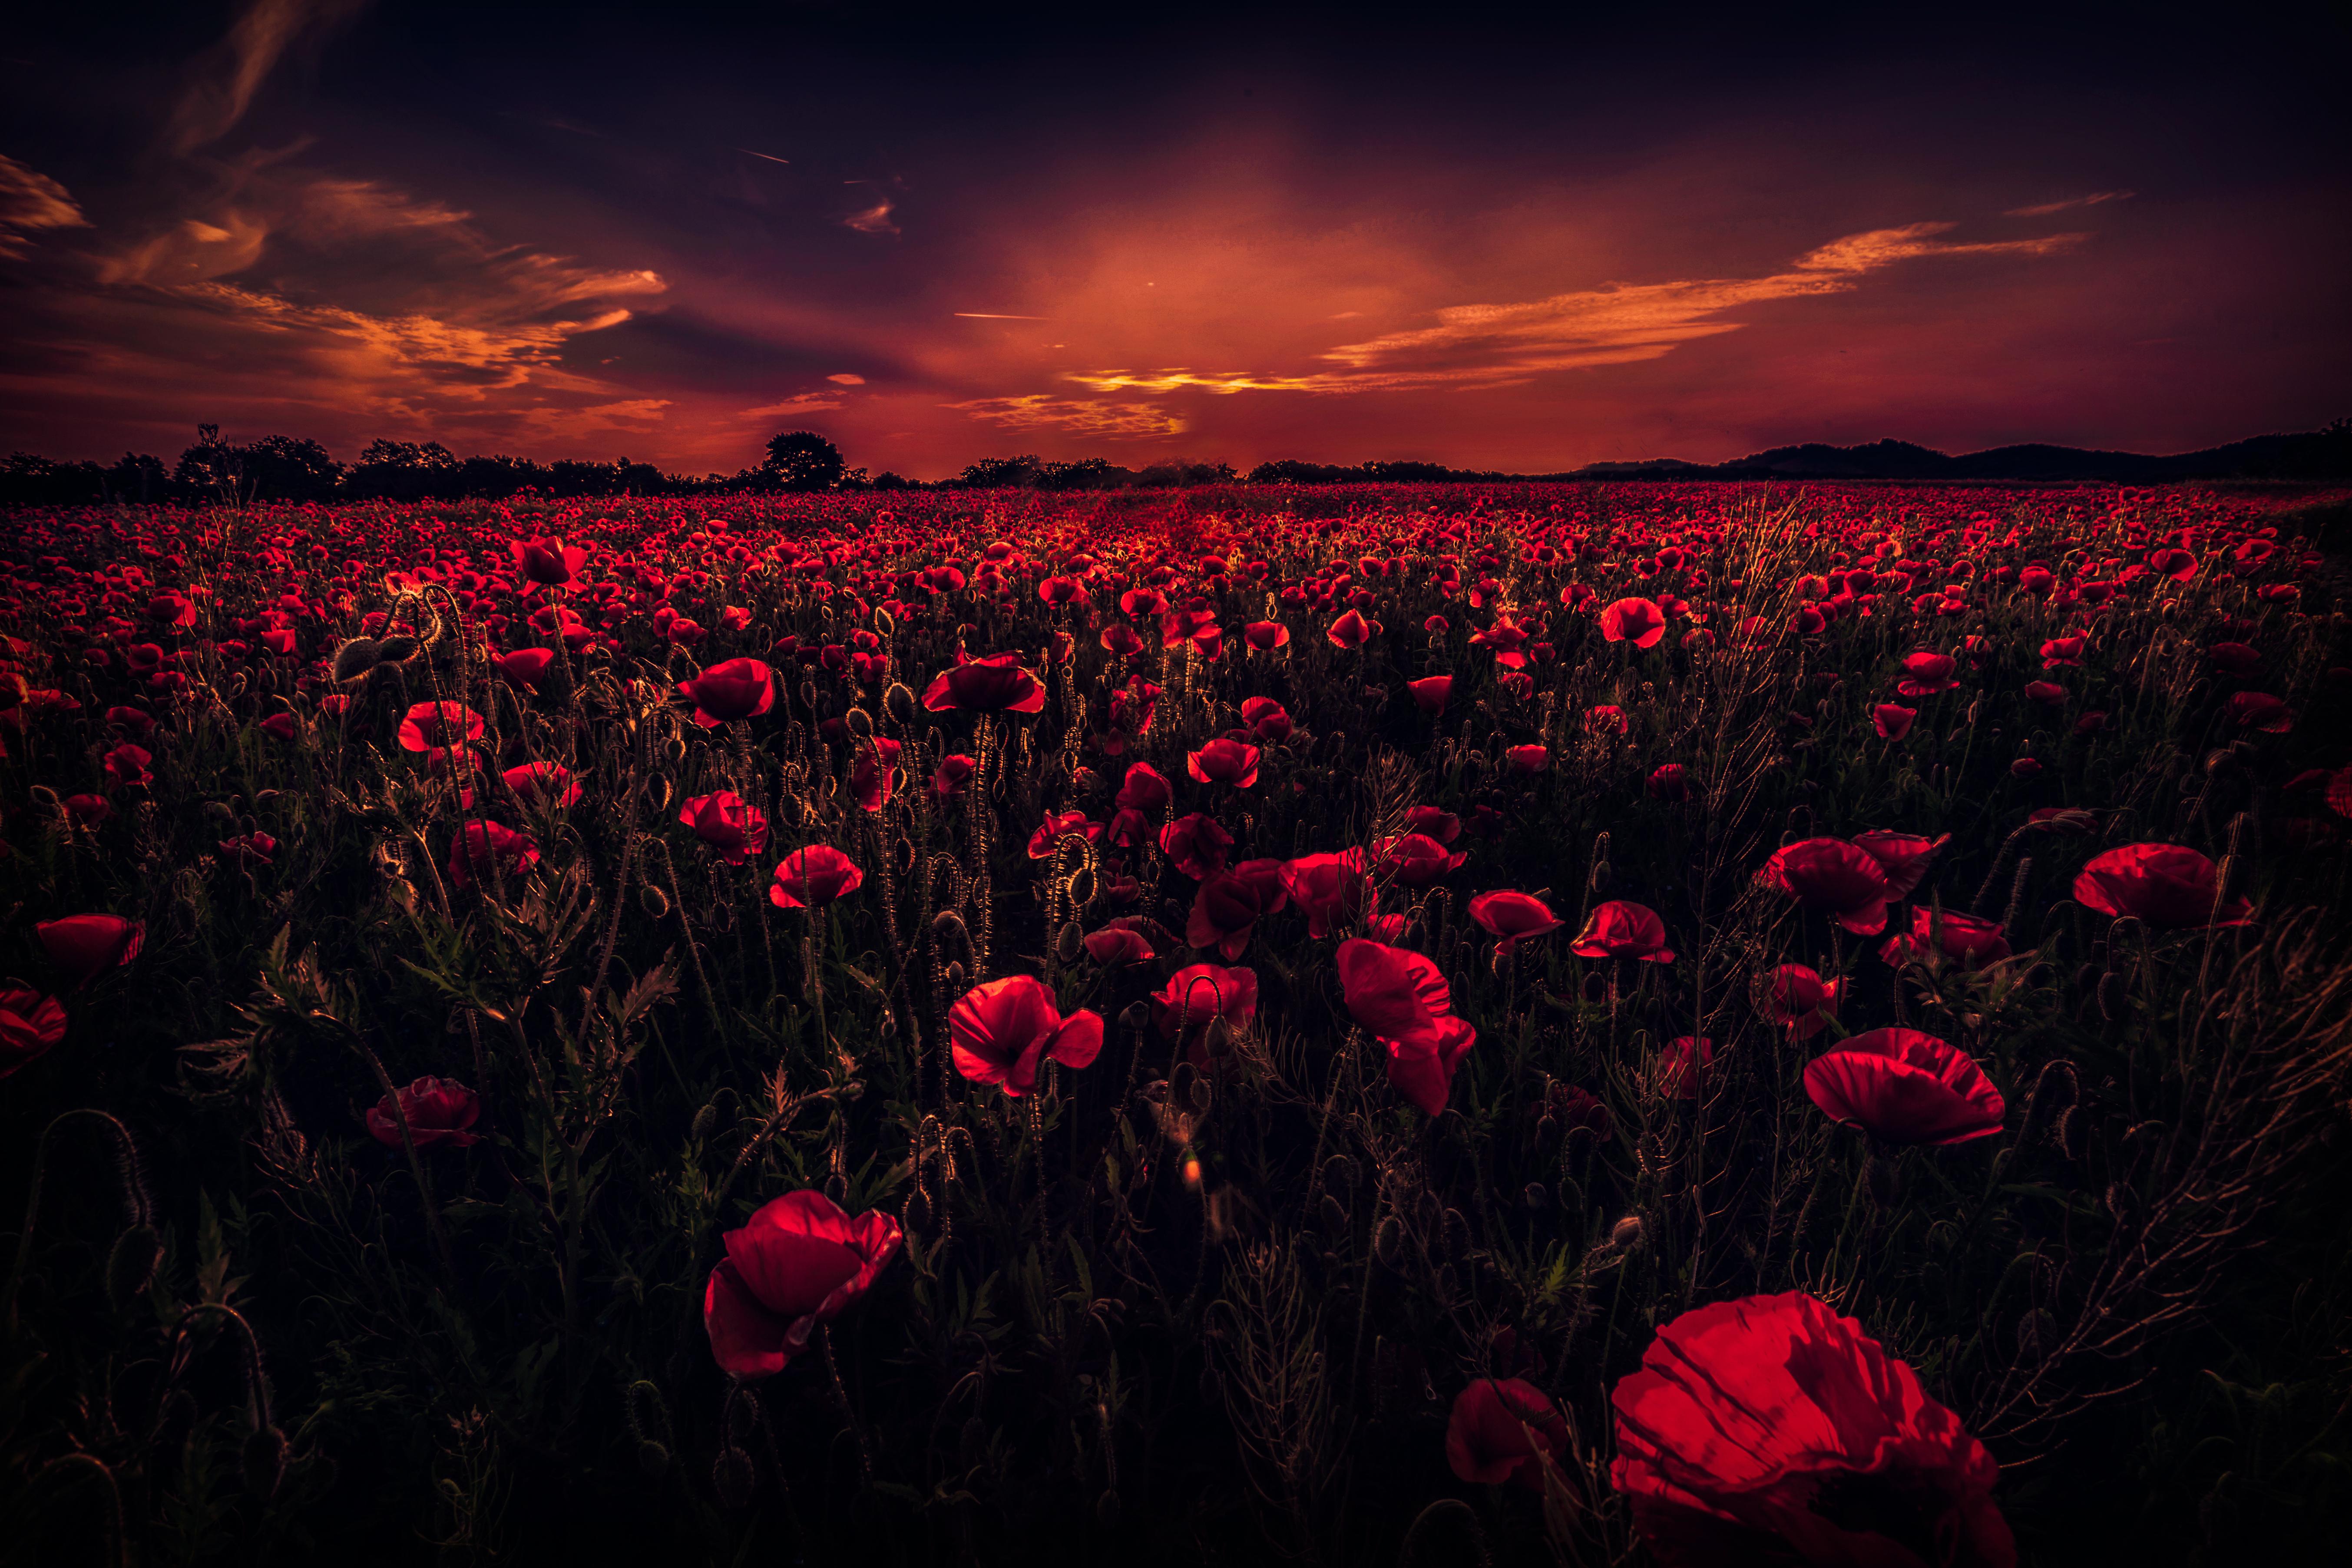 Dark Sunset over Poppy Field 5k Retina Ultra HD Wallpaper